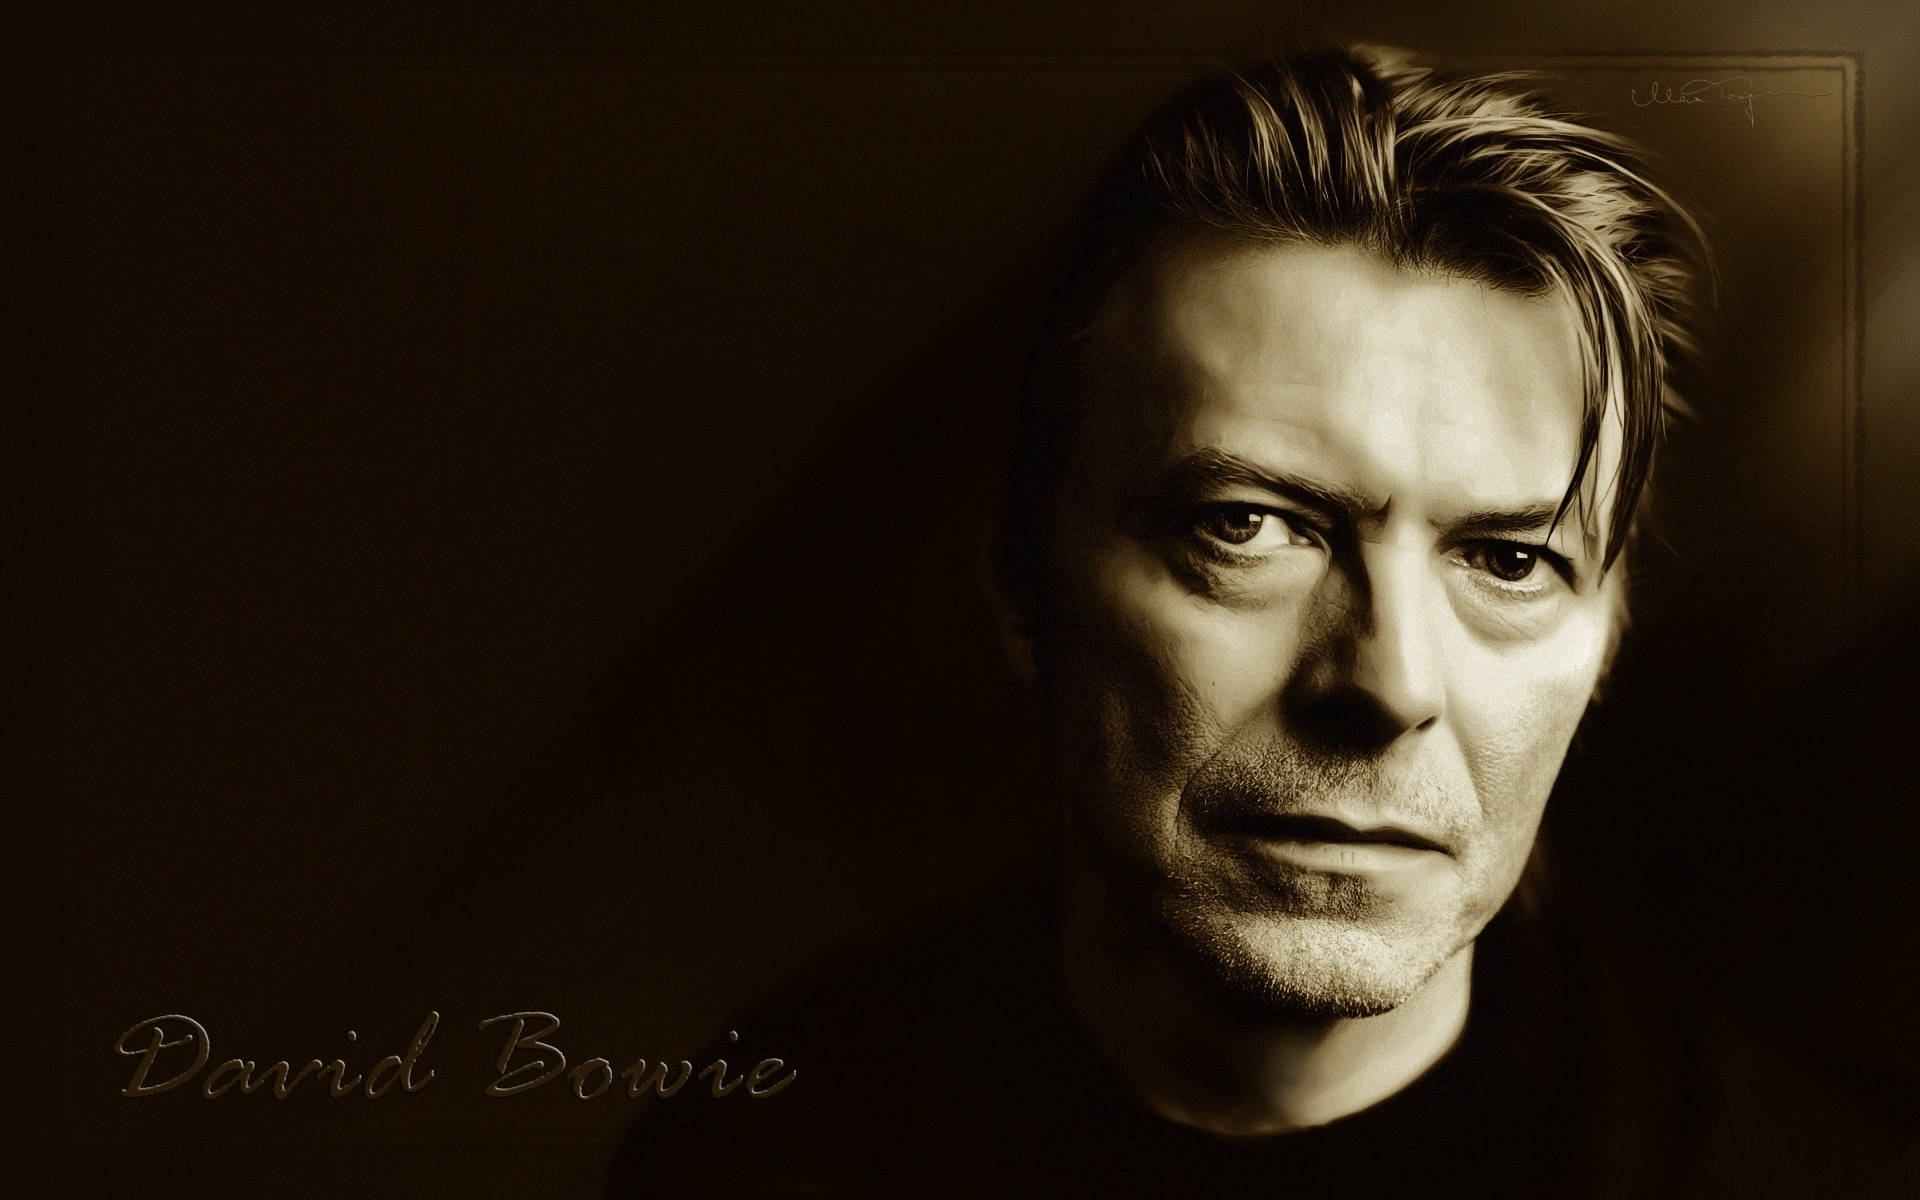 David Bowie Background Photos